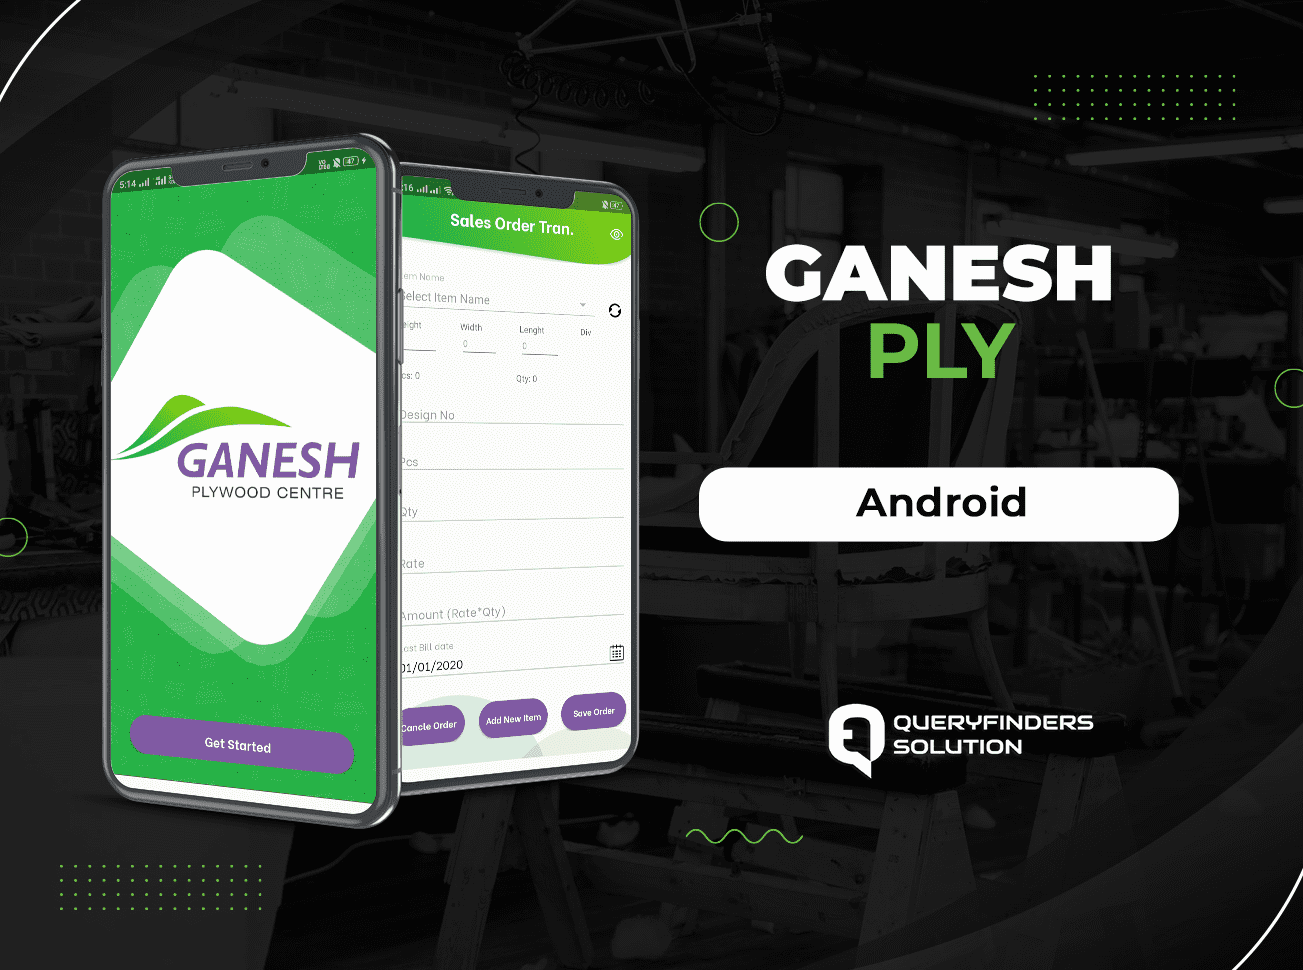 Ganesh Ply